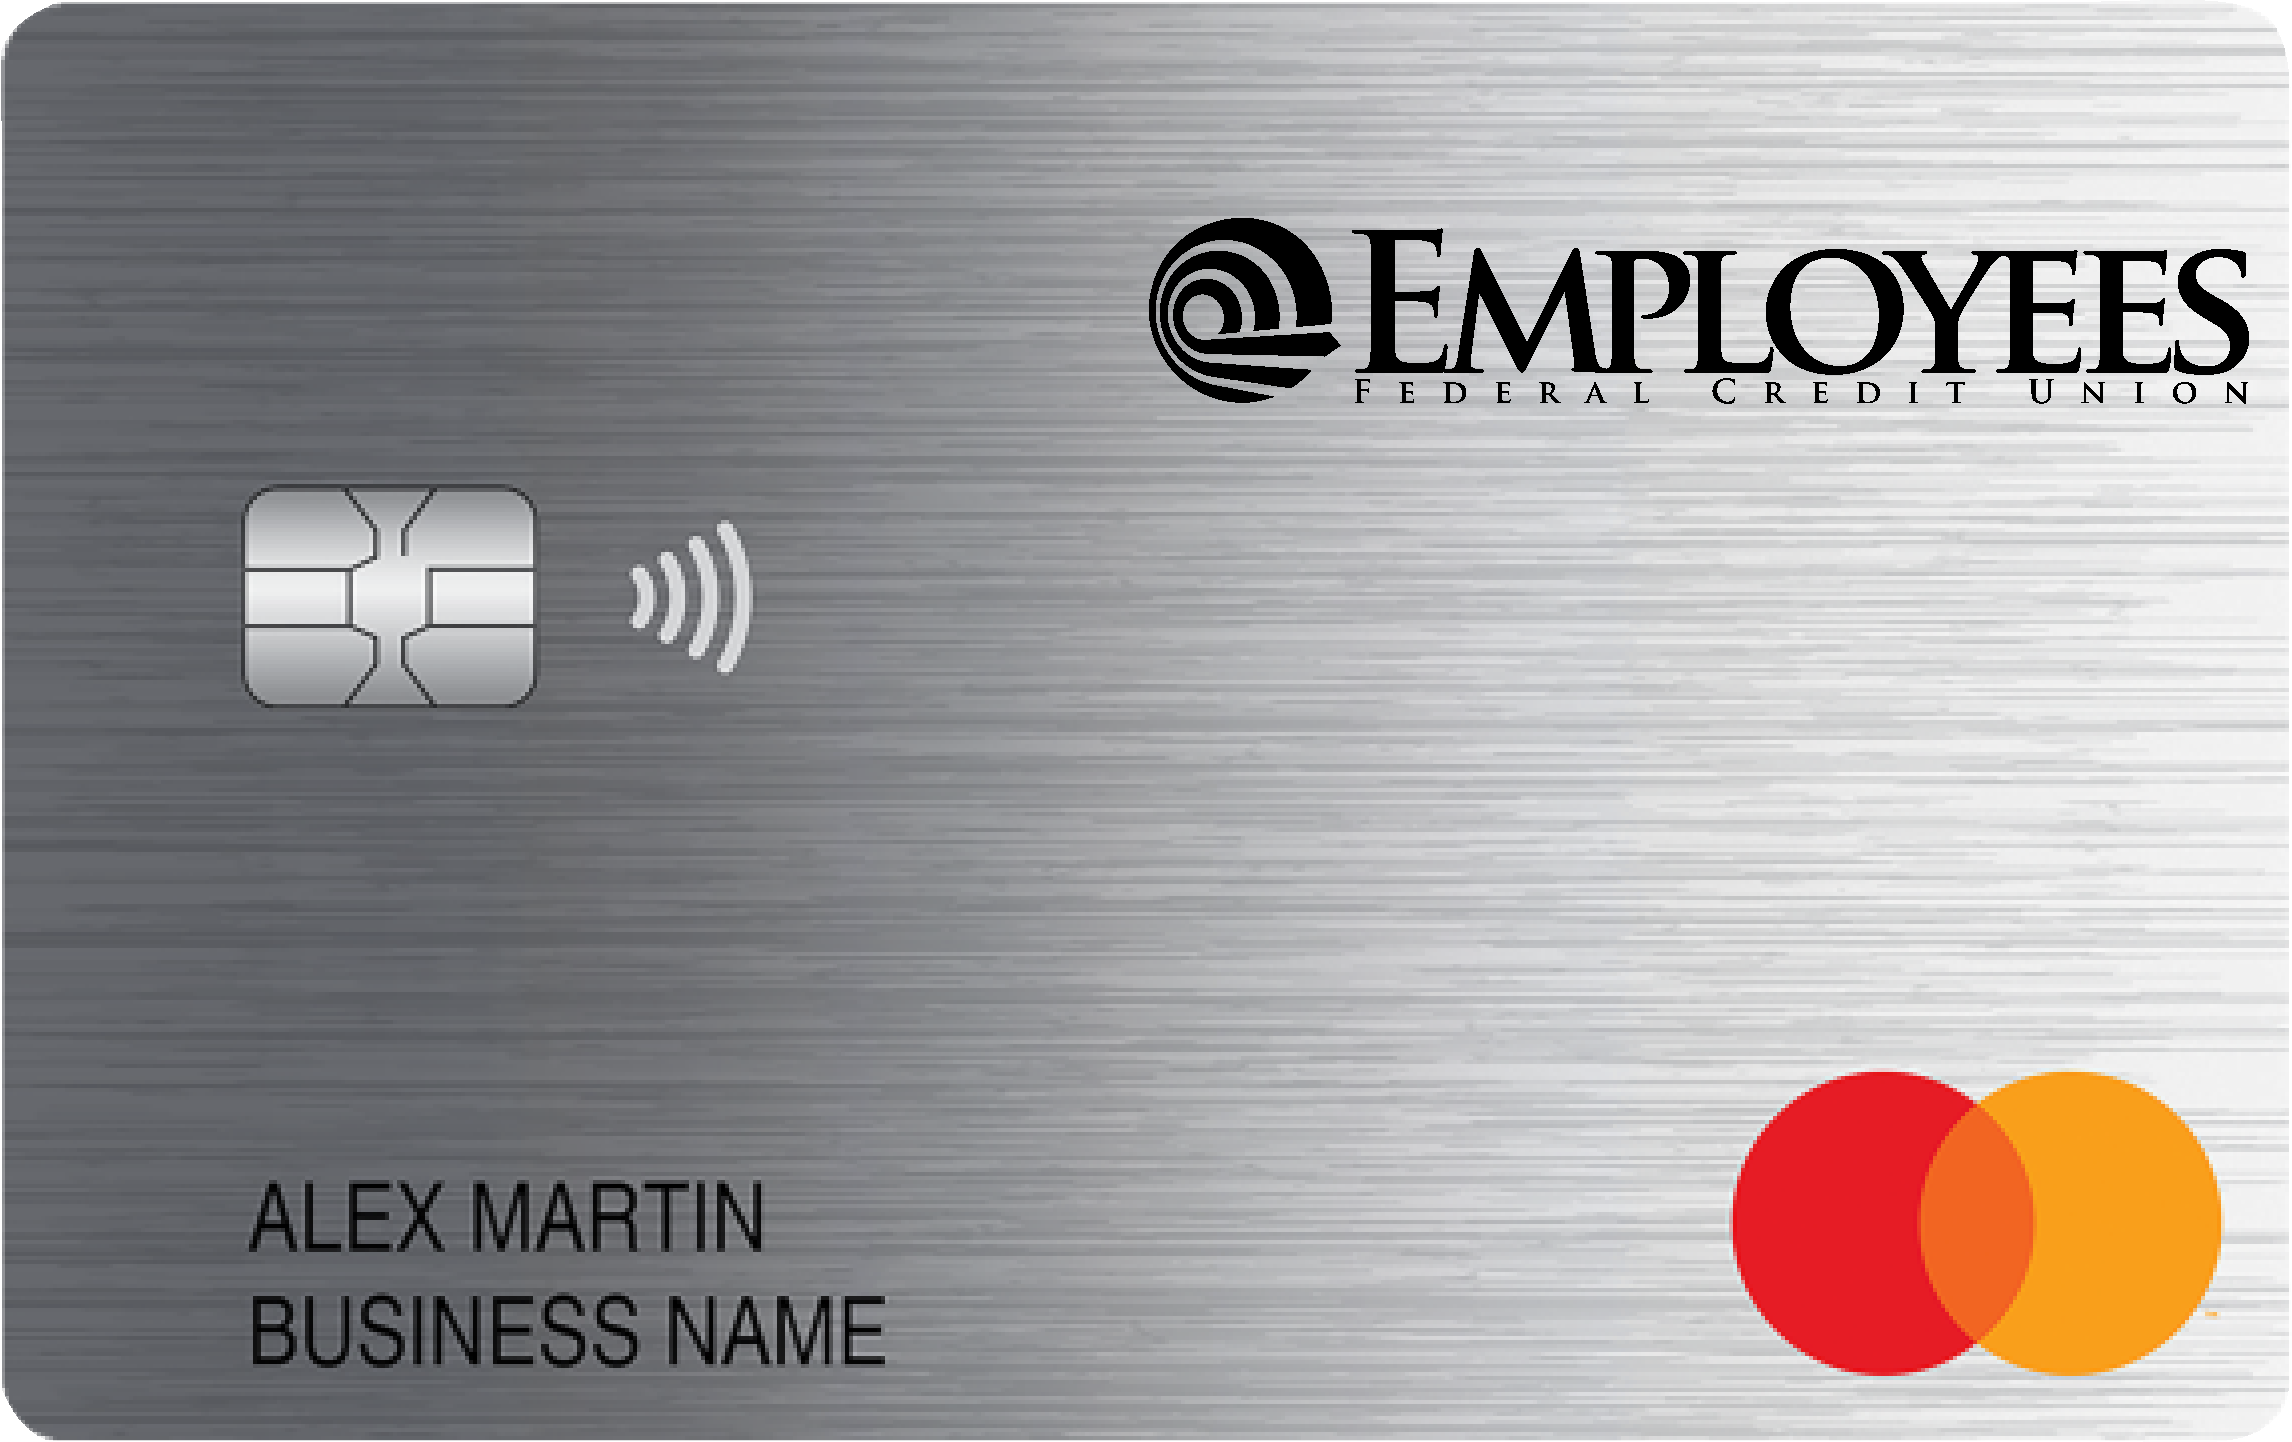 EFCU Smart Business Rewards Card